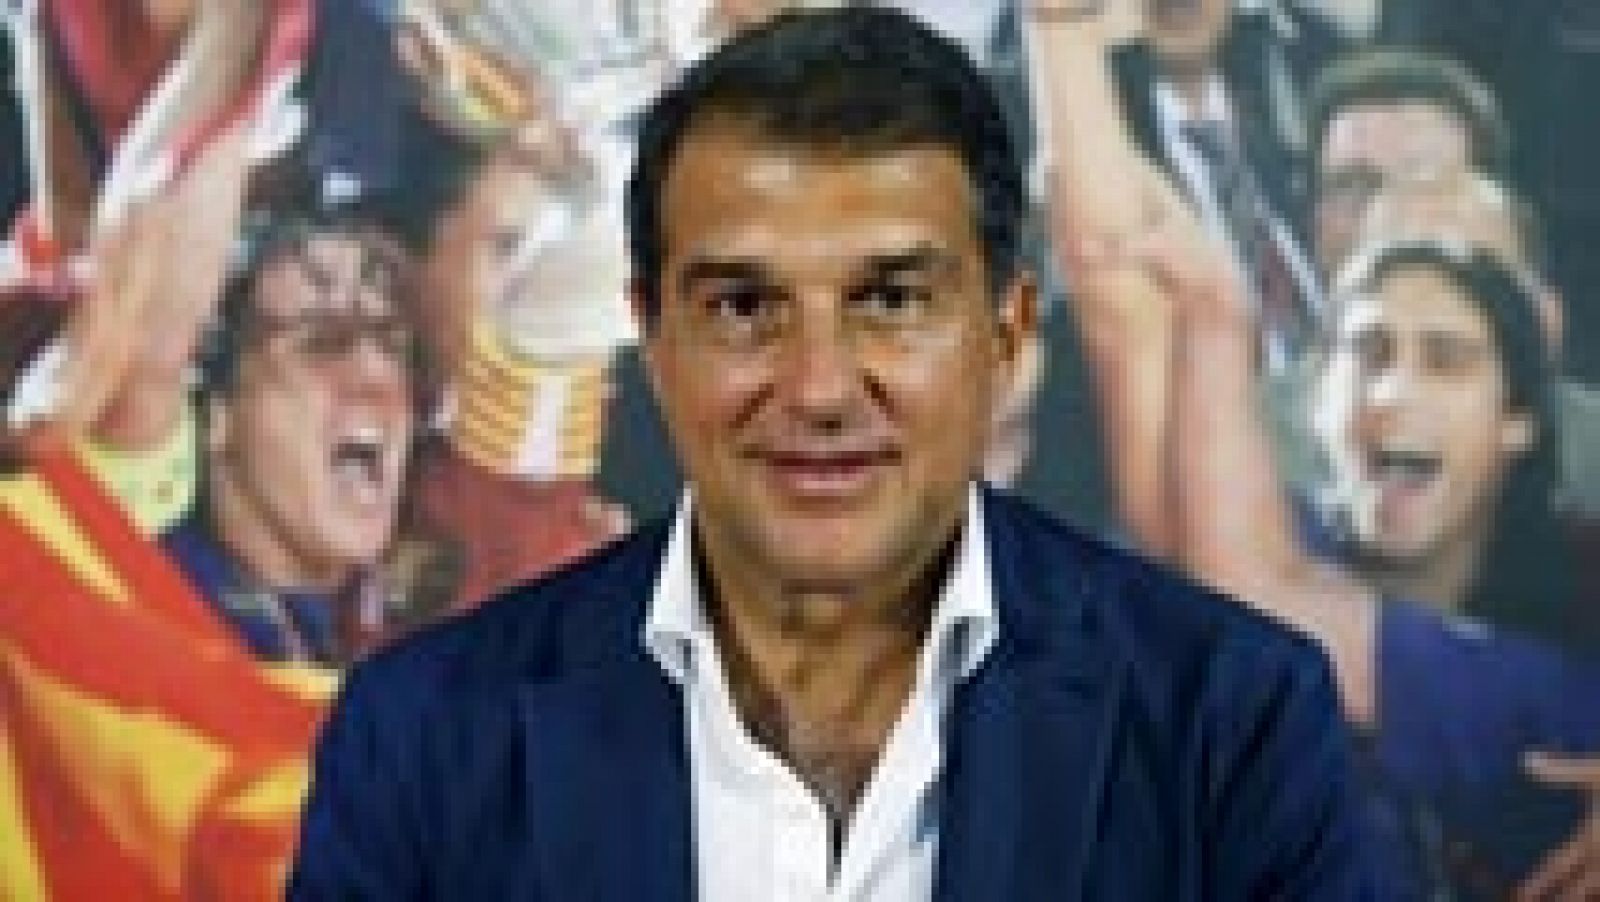 Telediario 1: Laporta propone a Freixa y Benedito "unir fuerzas" contra Bartomeu | RTVE Play